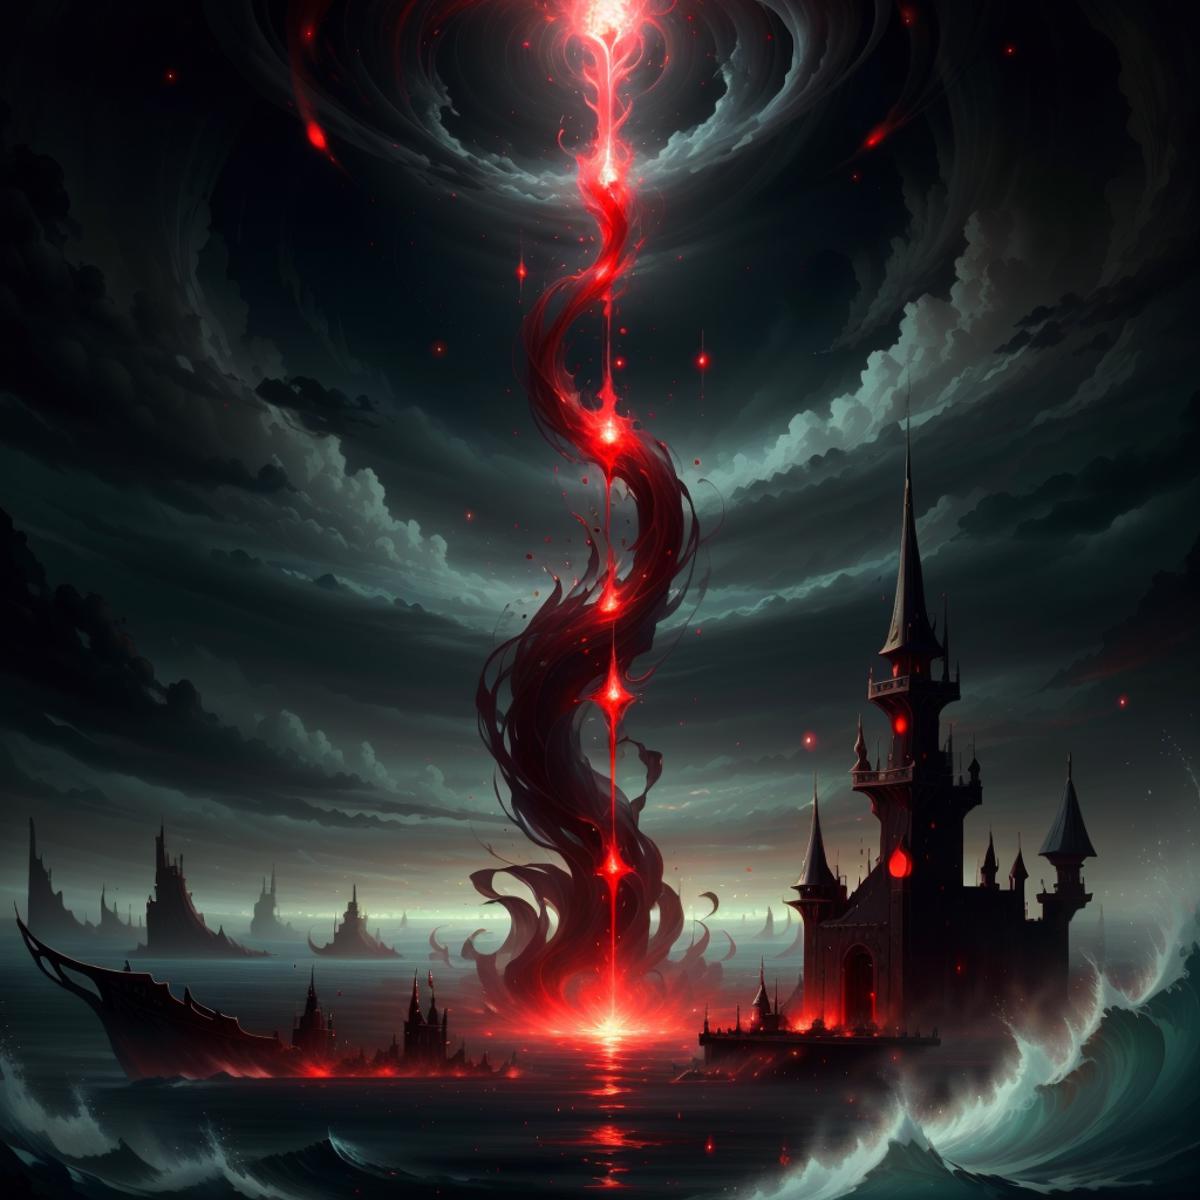 Blood Magic - Grimoire image by navimixu